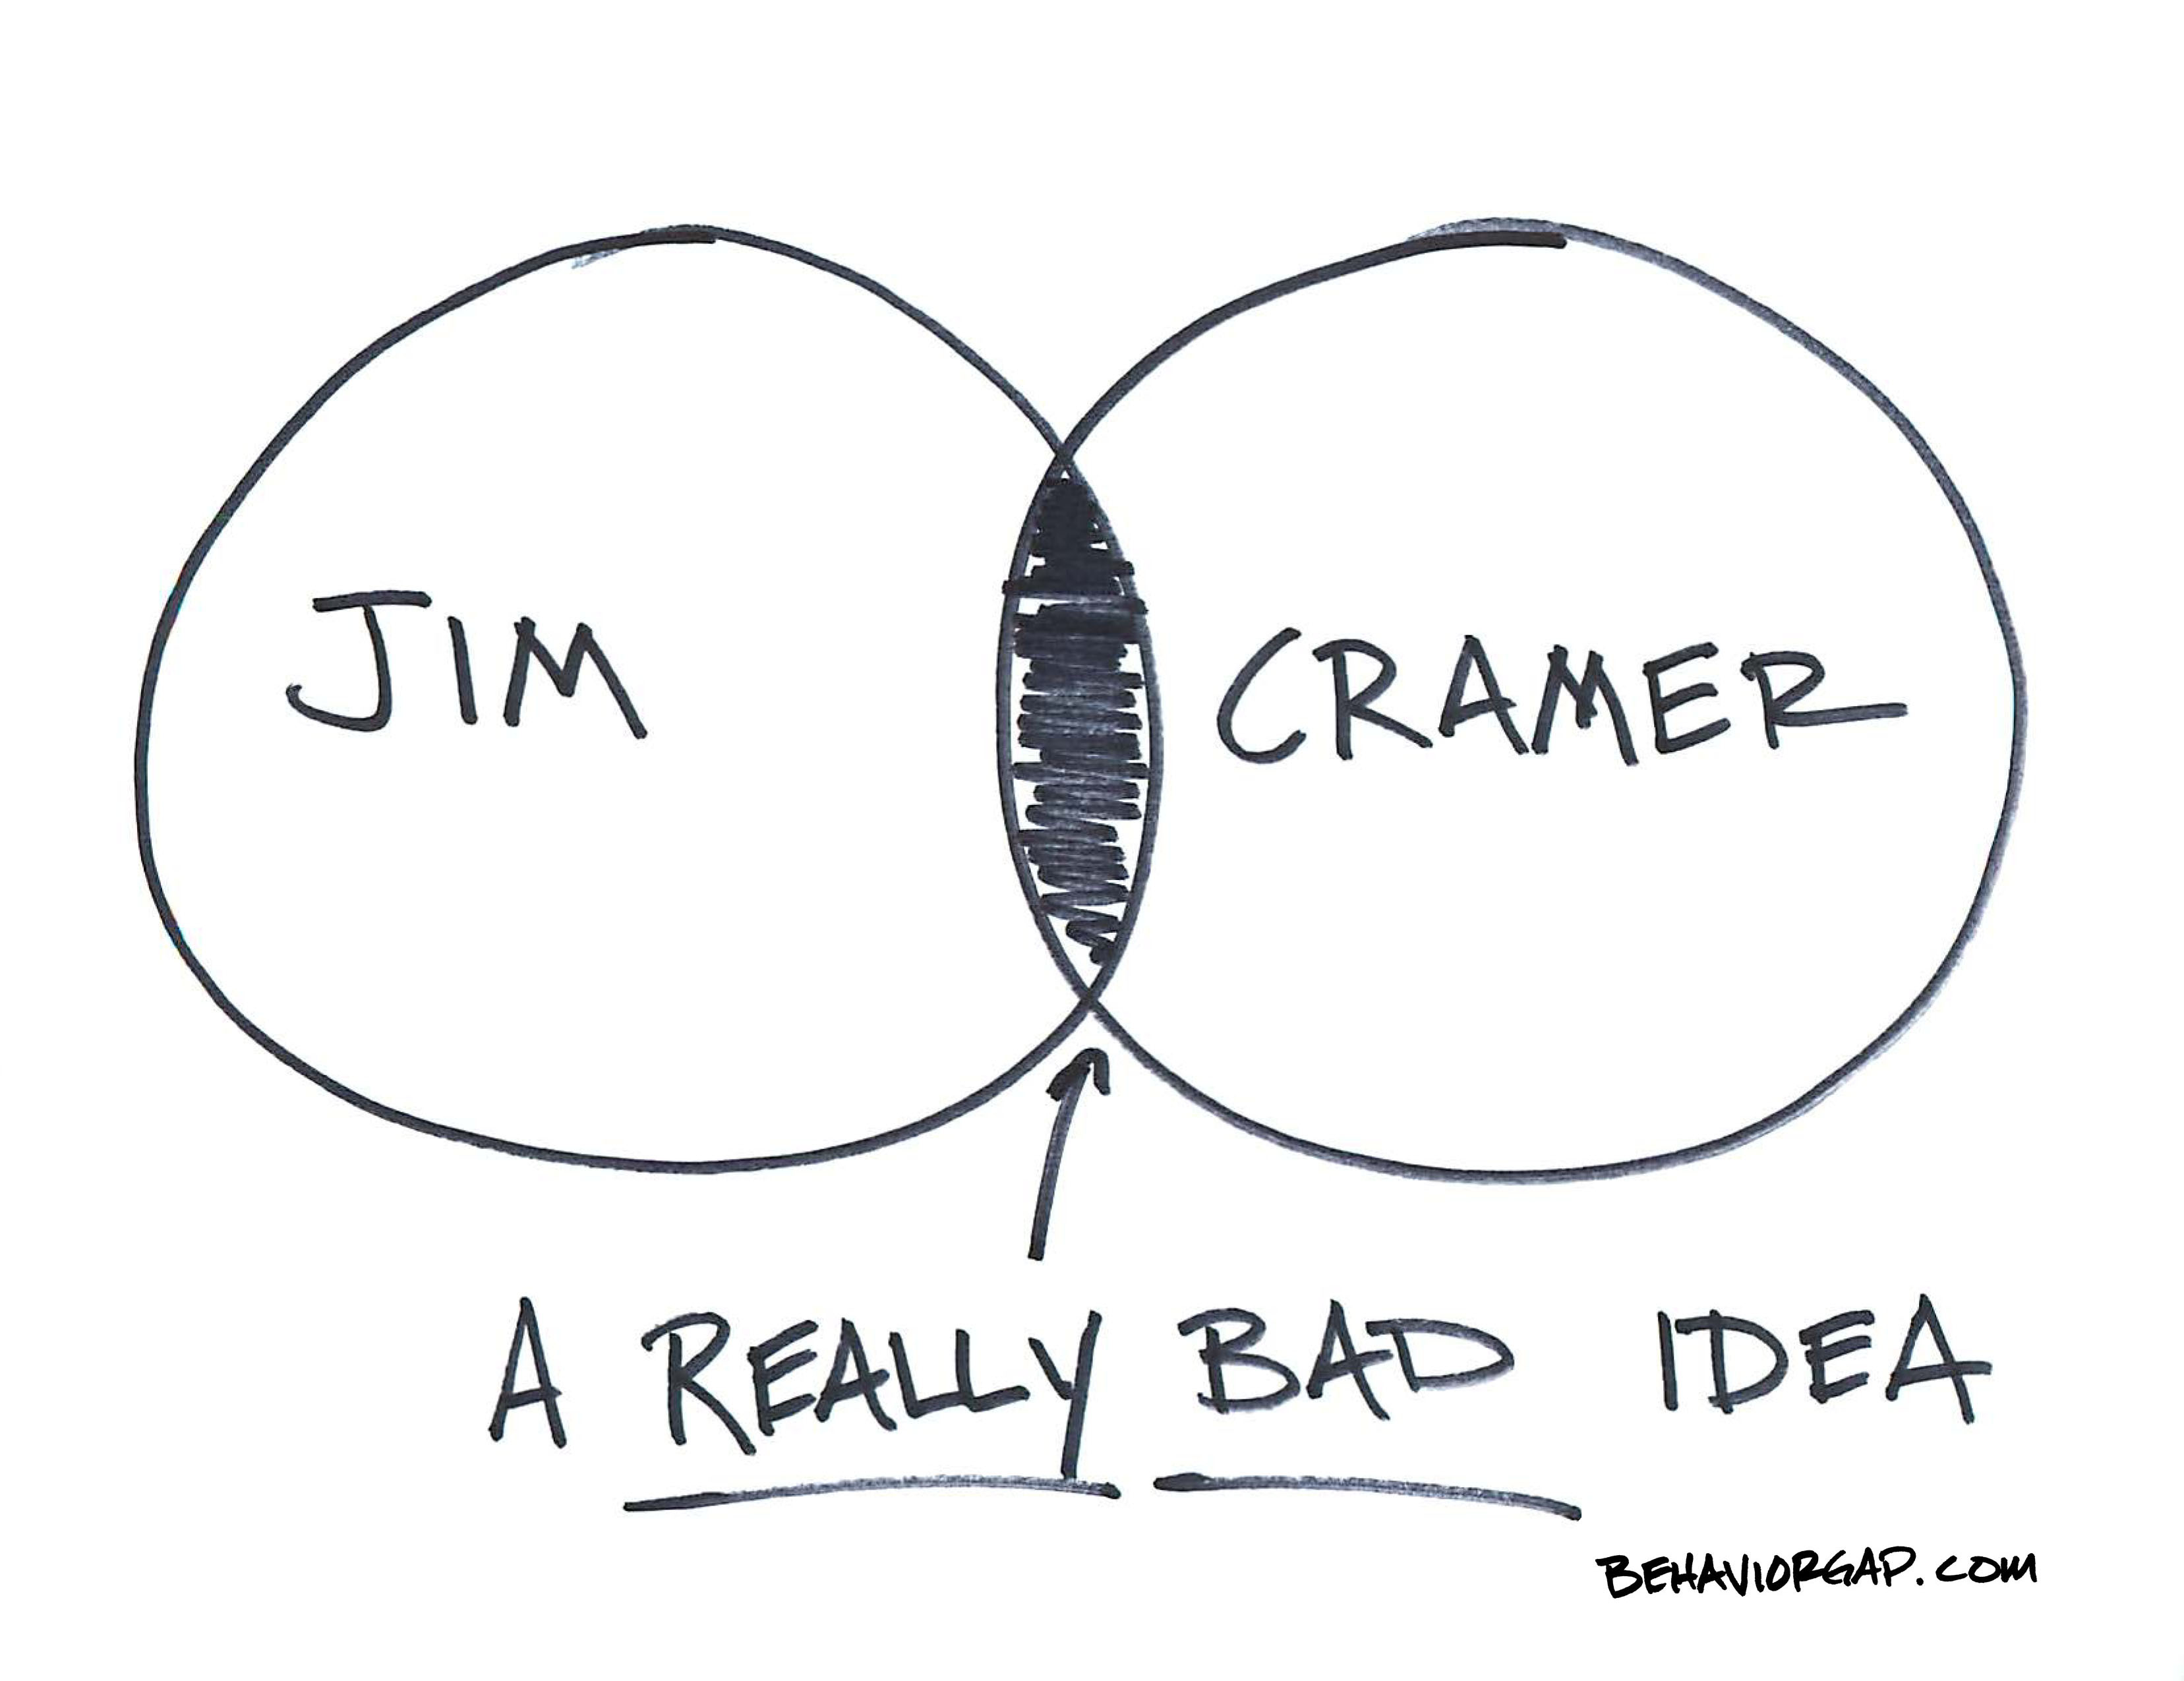 Jim Cramer of MadMoney